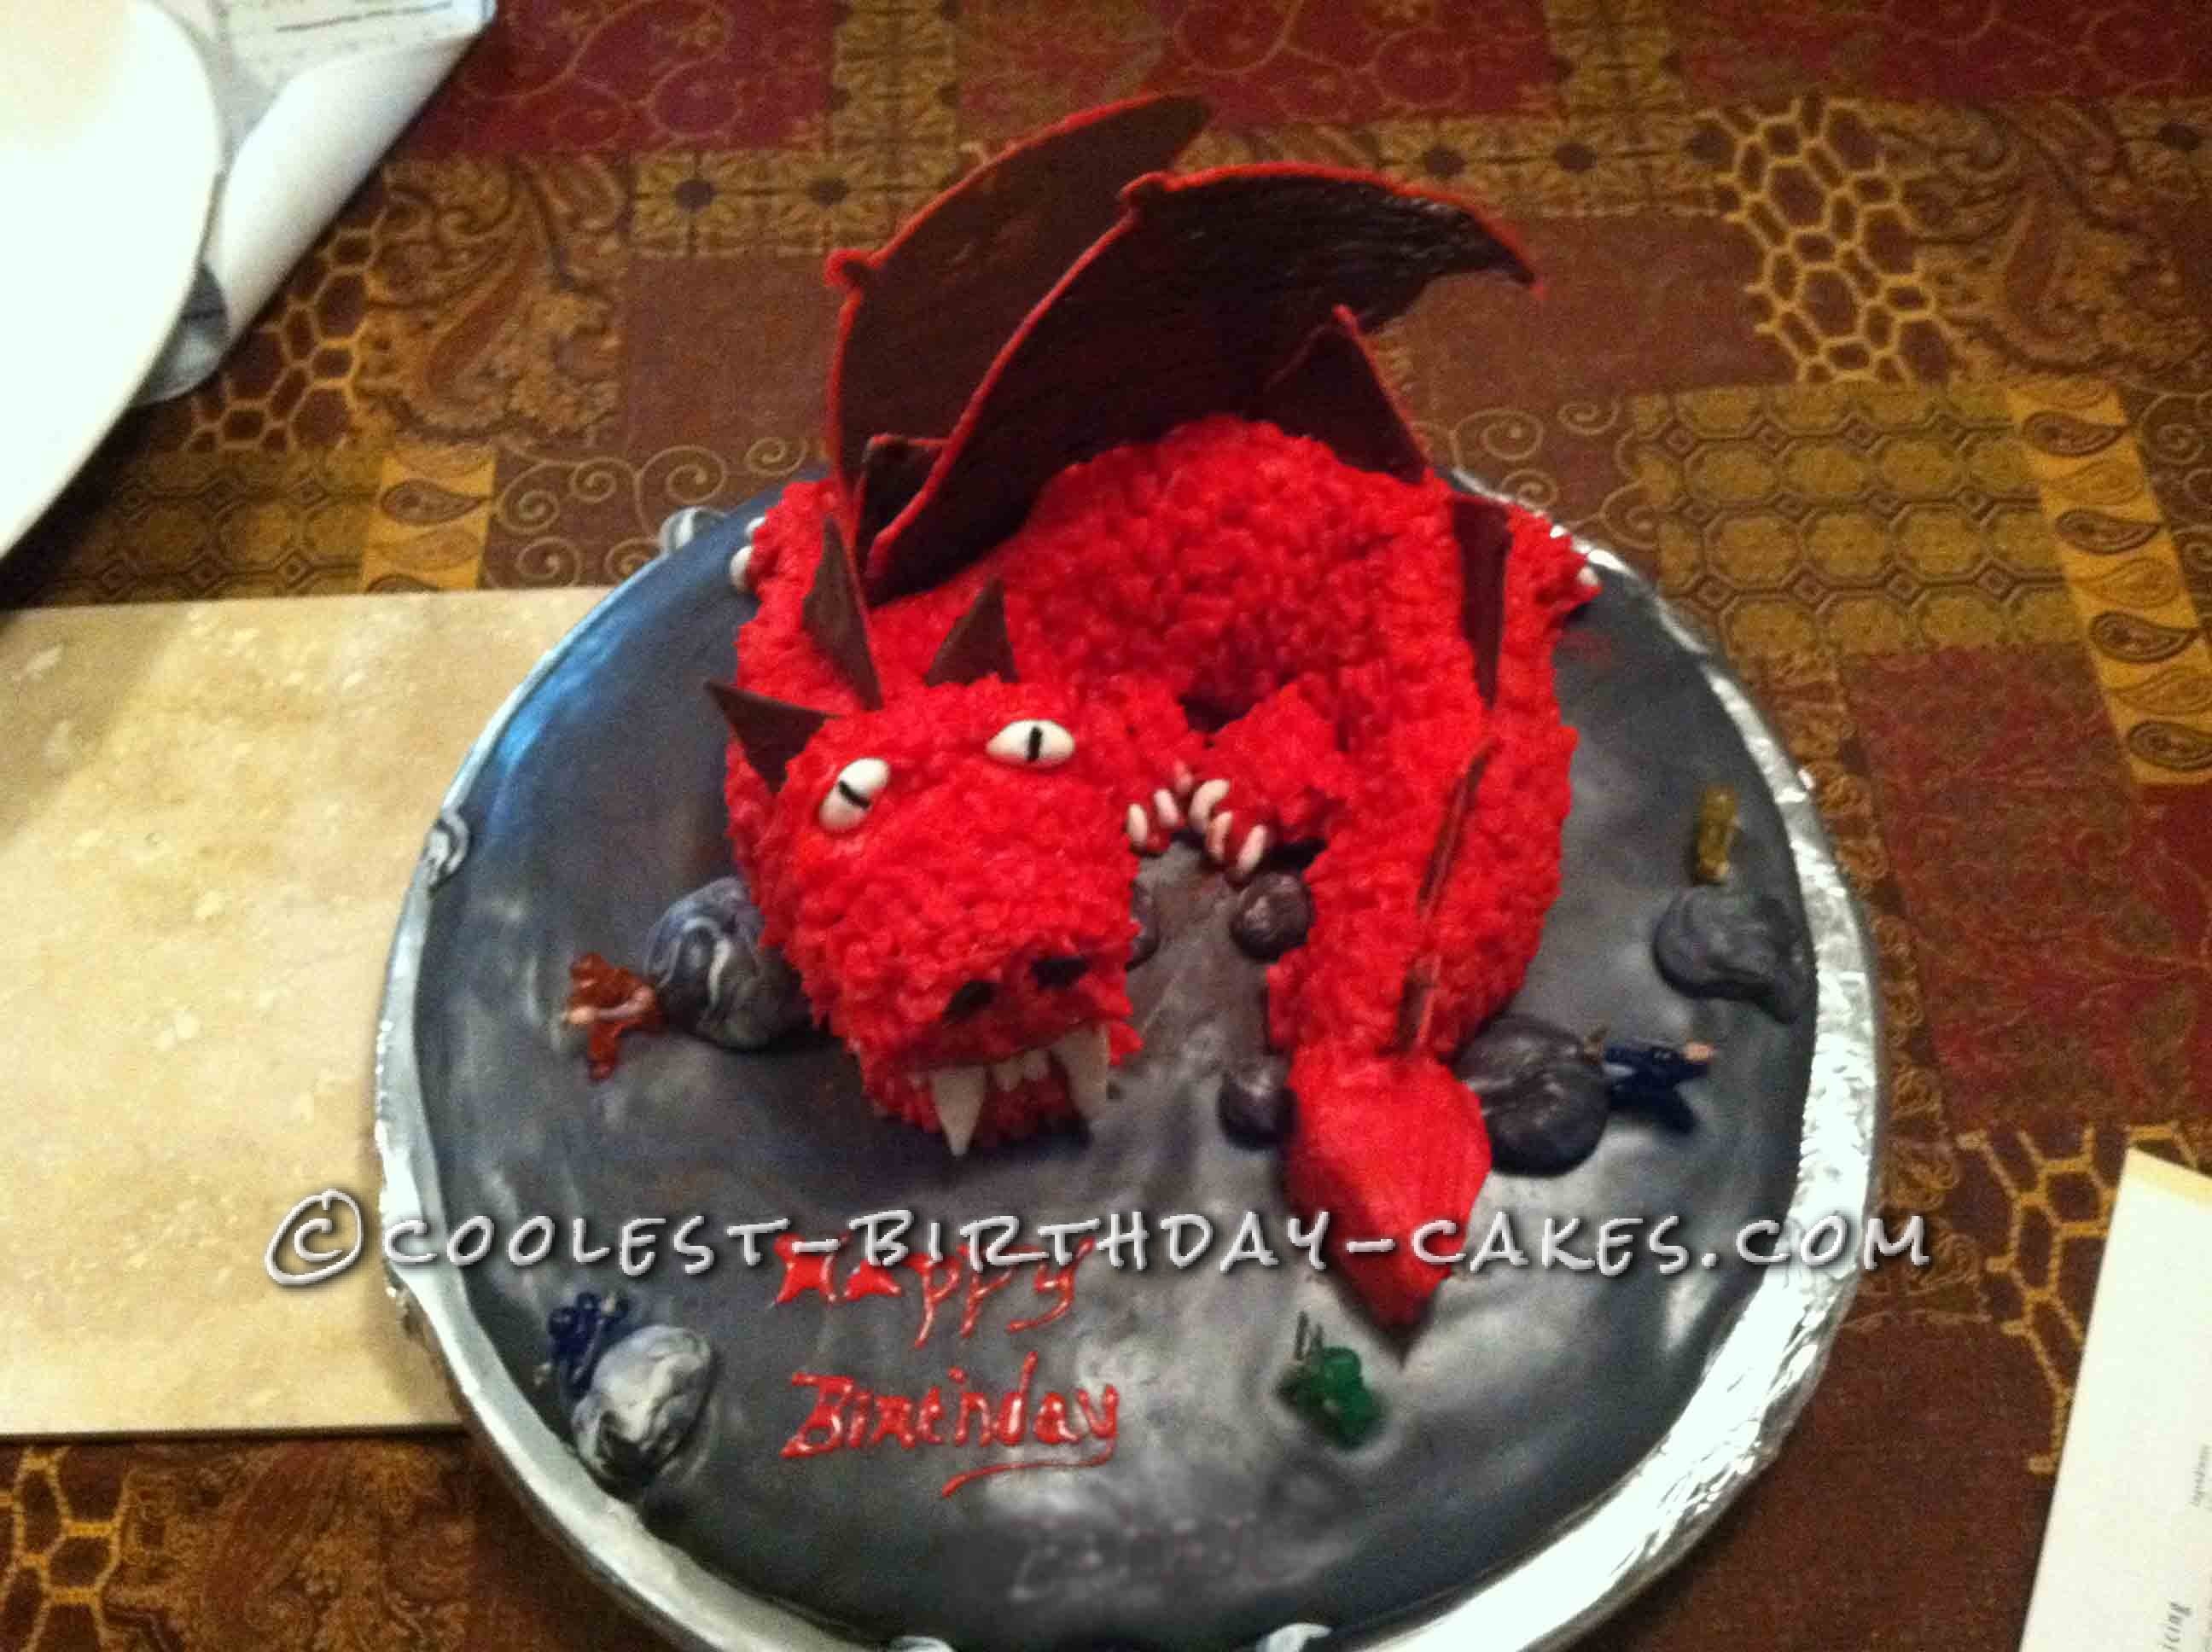 Cool Dragon Cake for a Ninja Birthday Party